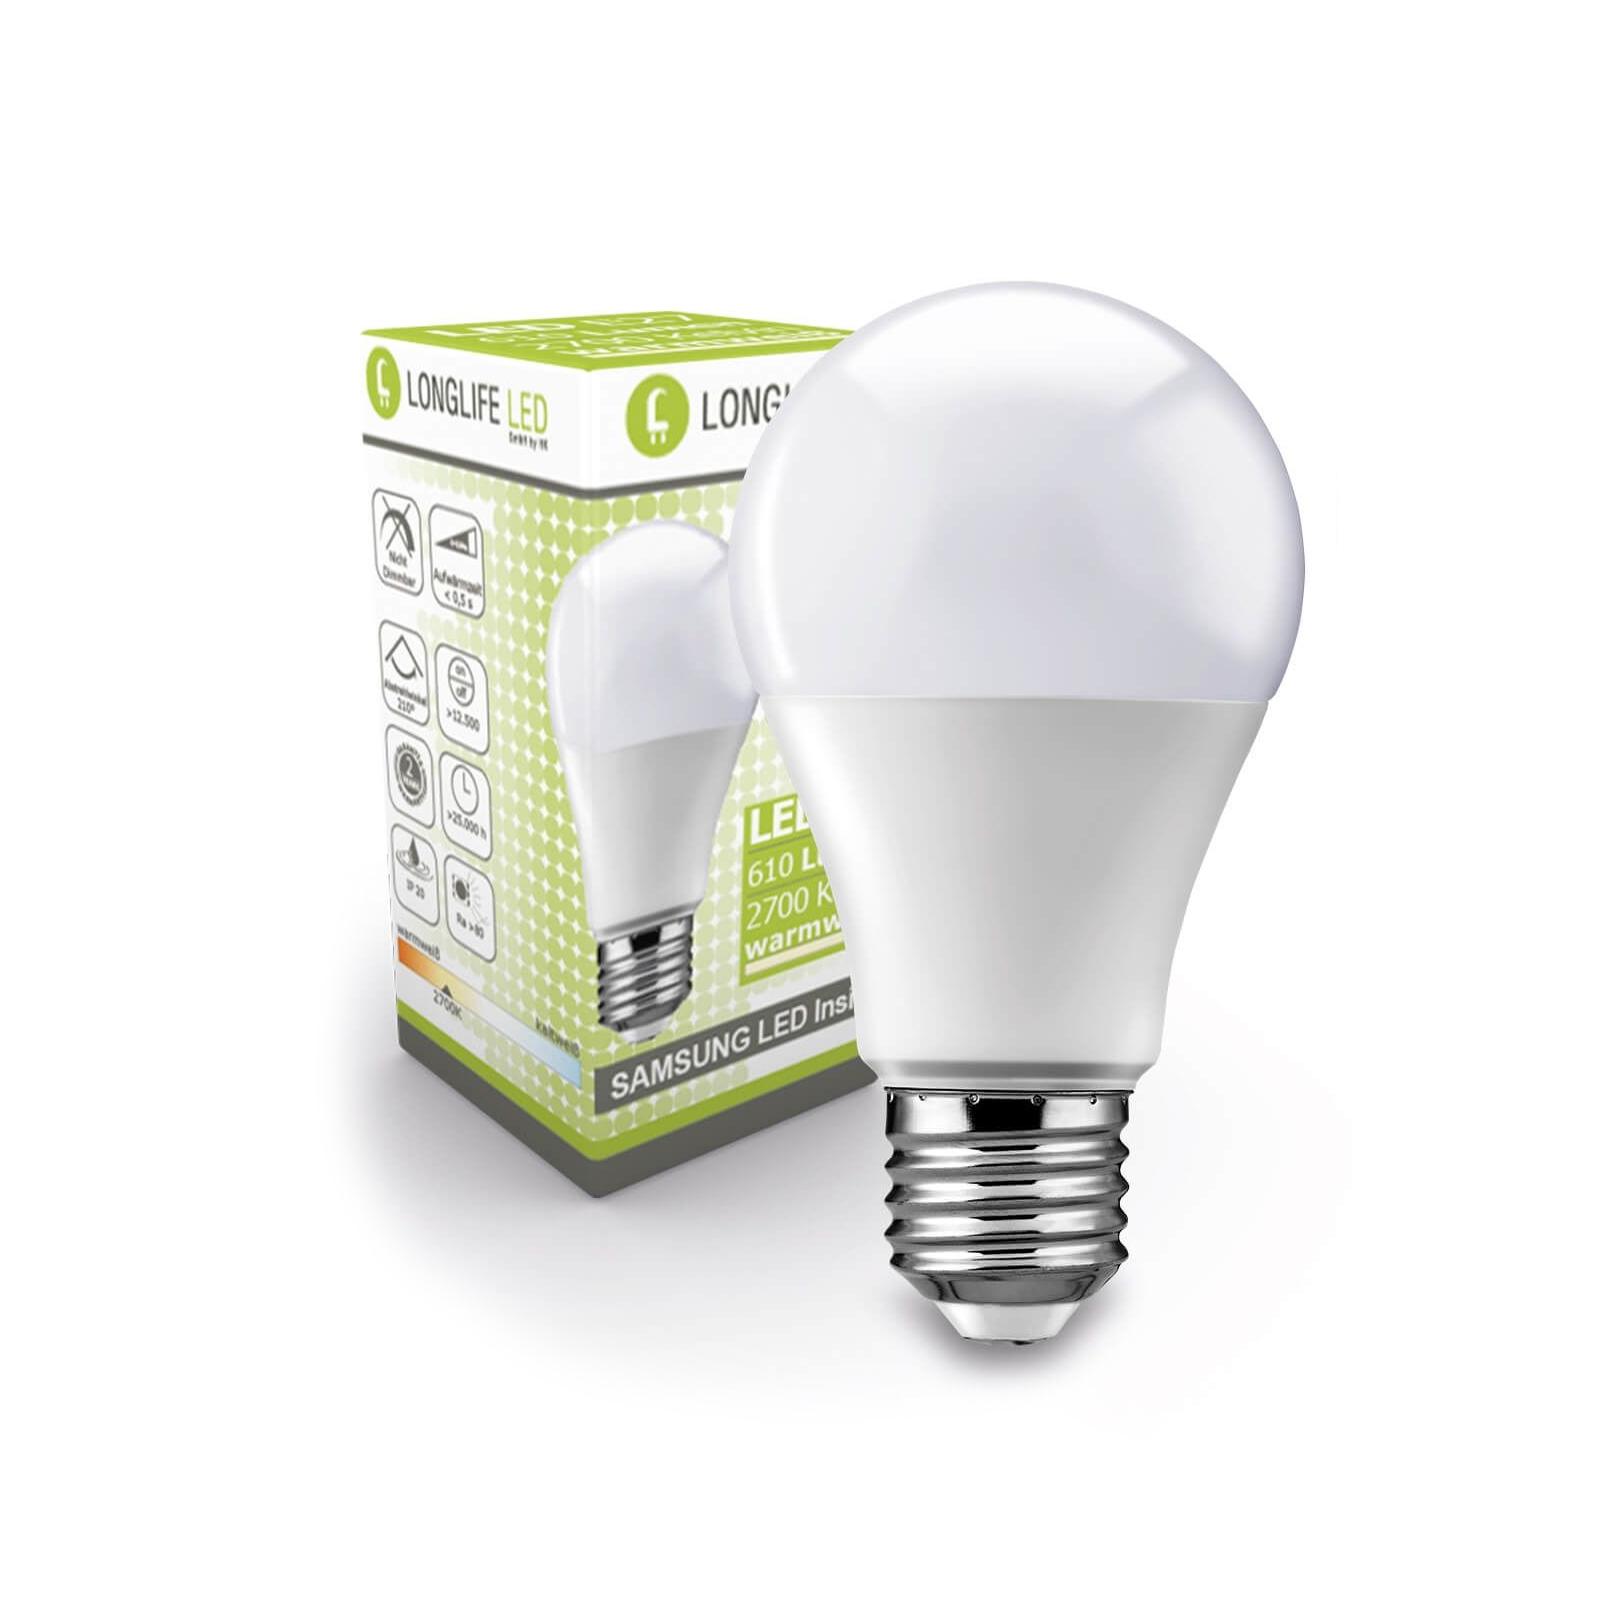 LED Lampe E27 7W A60 matt 610lm 210°Abstrahlwinkel - Lichtfarbe: Warmweiß 2700K